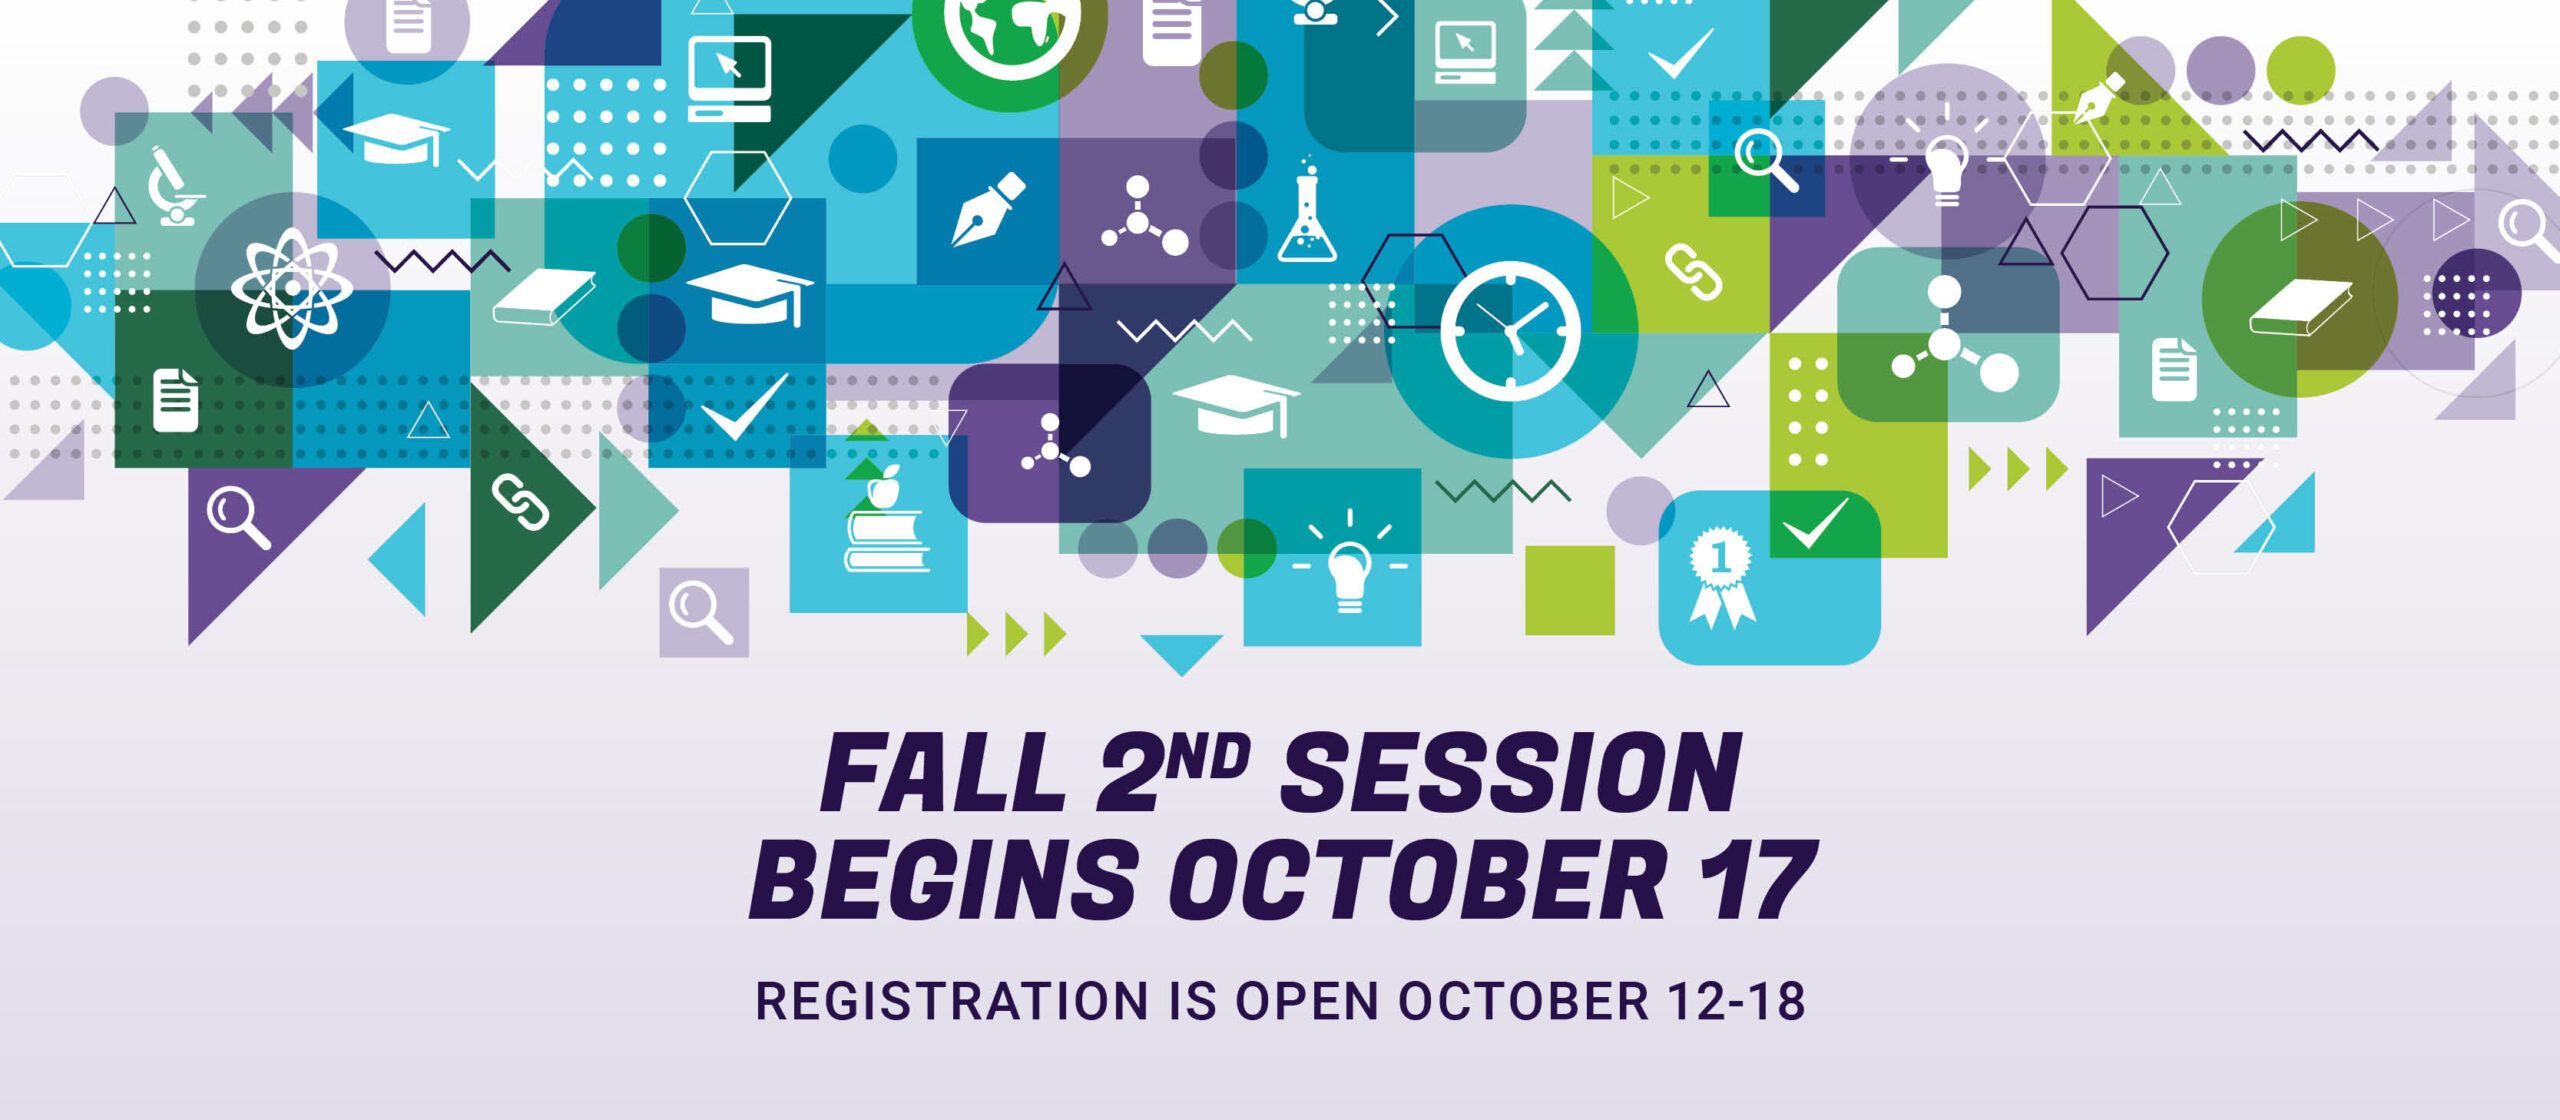 Fall 2nd Session begins October 17. Registration is open October 12-18.